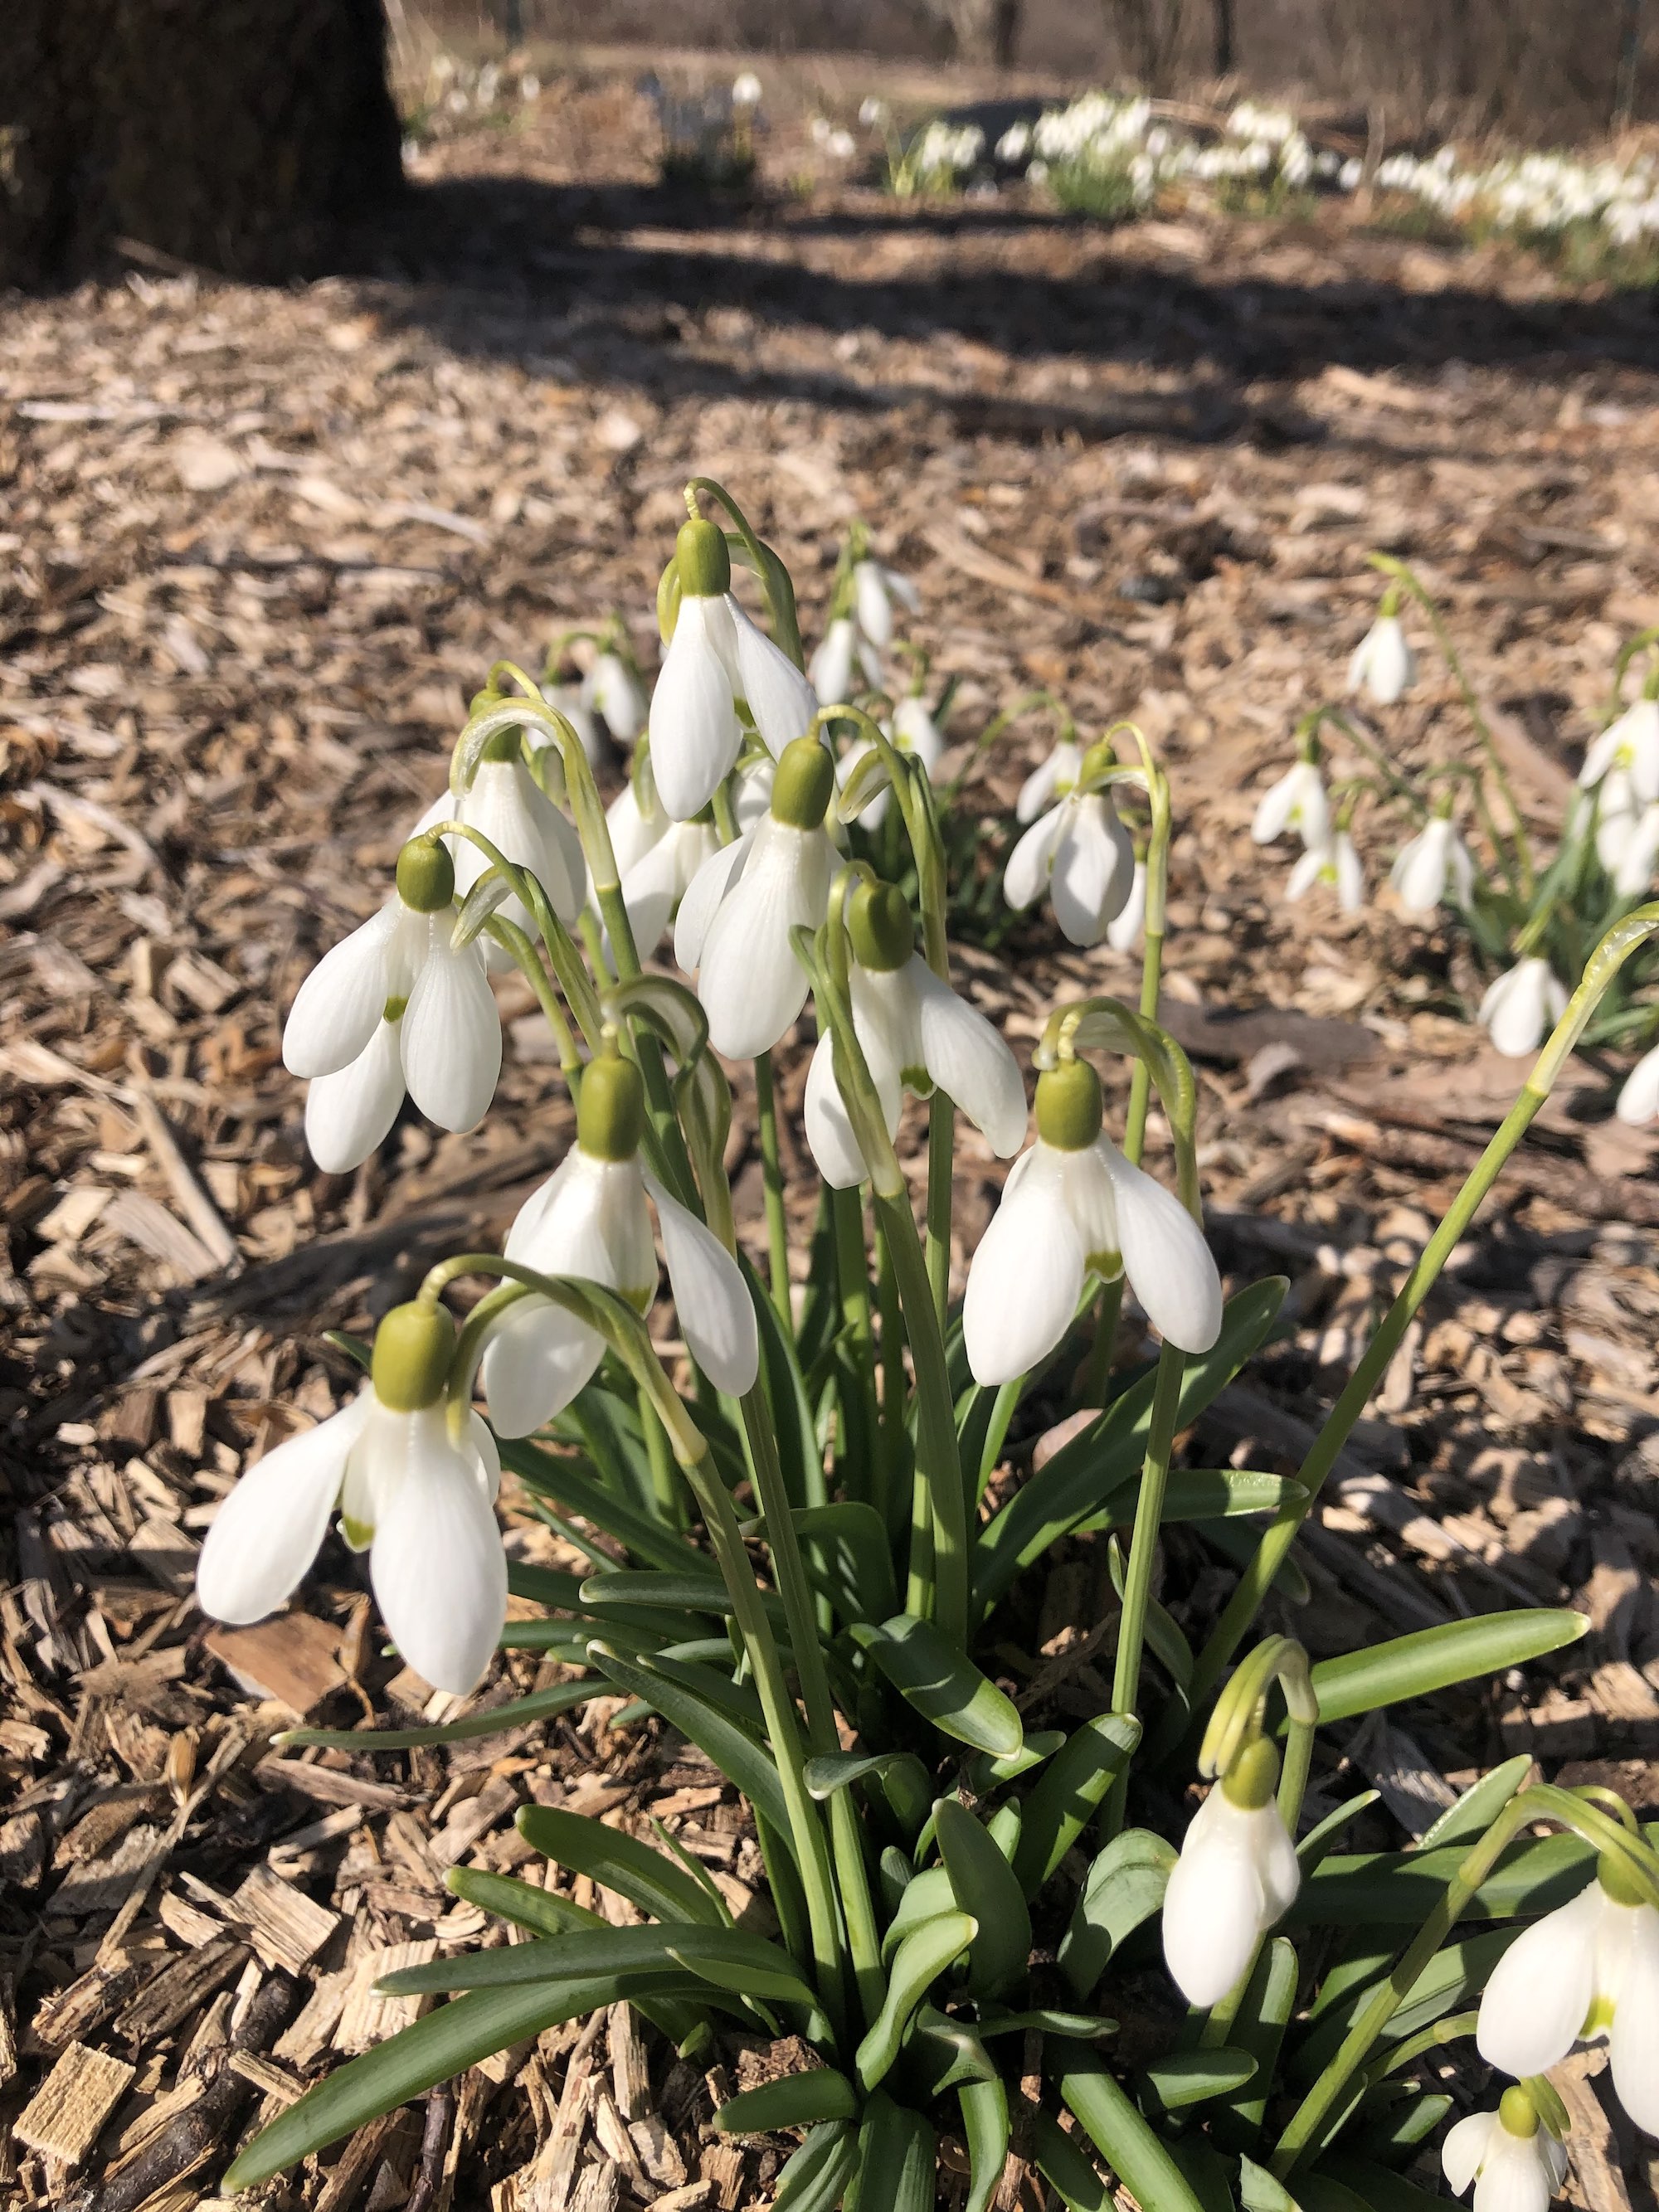 Snowdrops in the University of Wisconsin Arbortetum Longenecker Gardens in Madison Wisconsin on March  20, 2021.